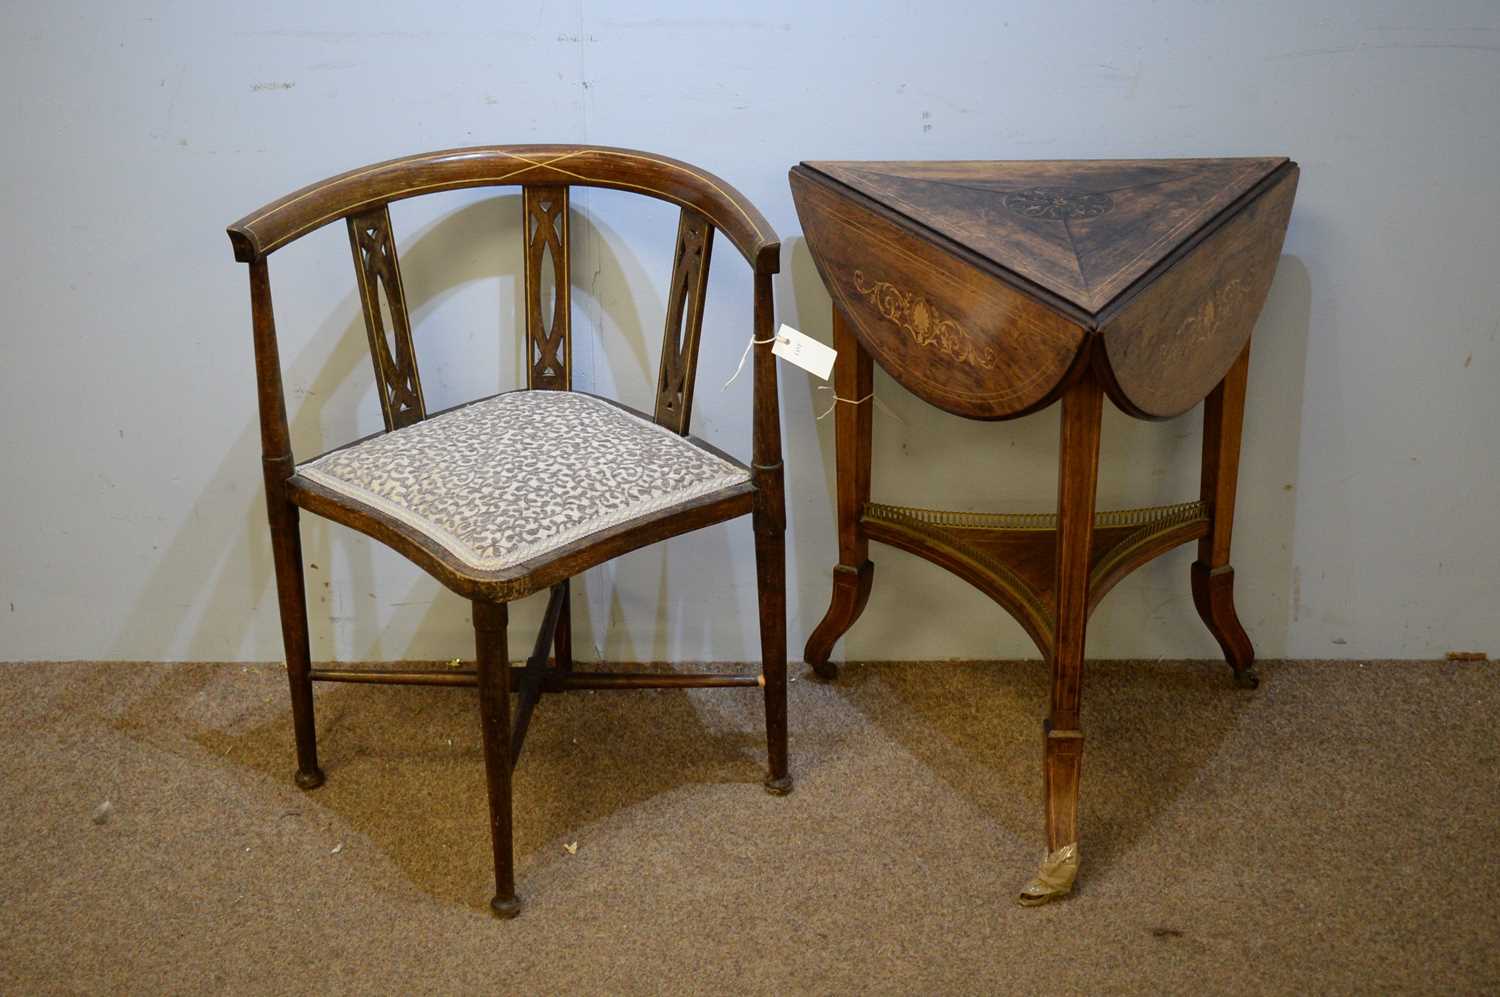 Edwardian drop leaf table; and an Edwardian corner chair.